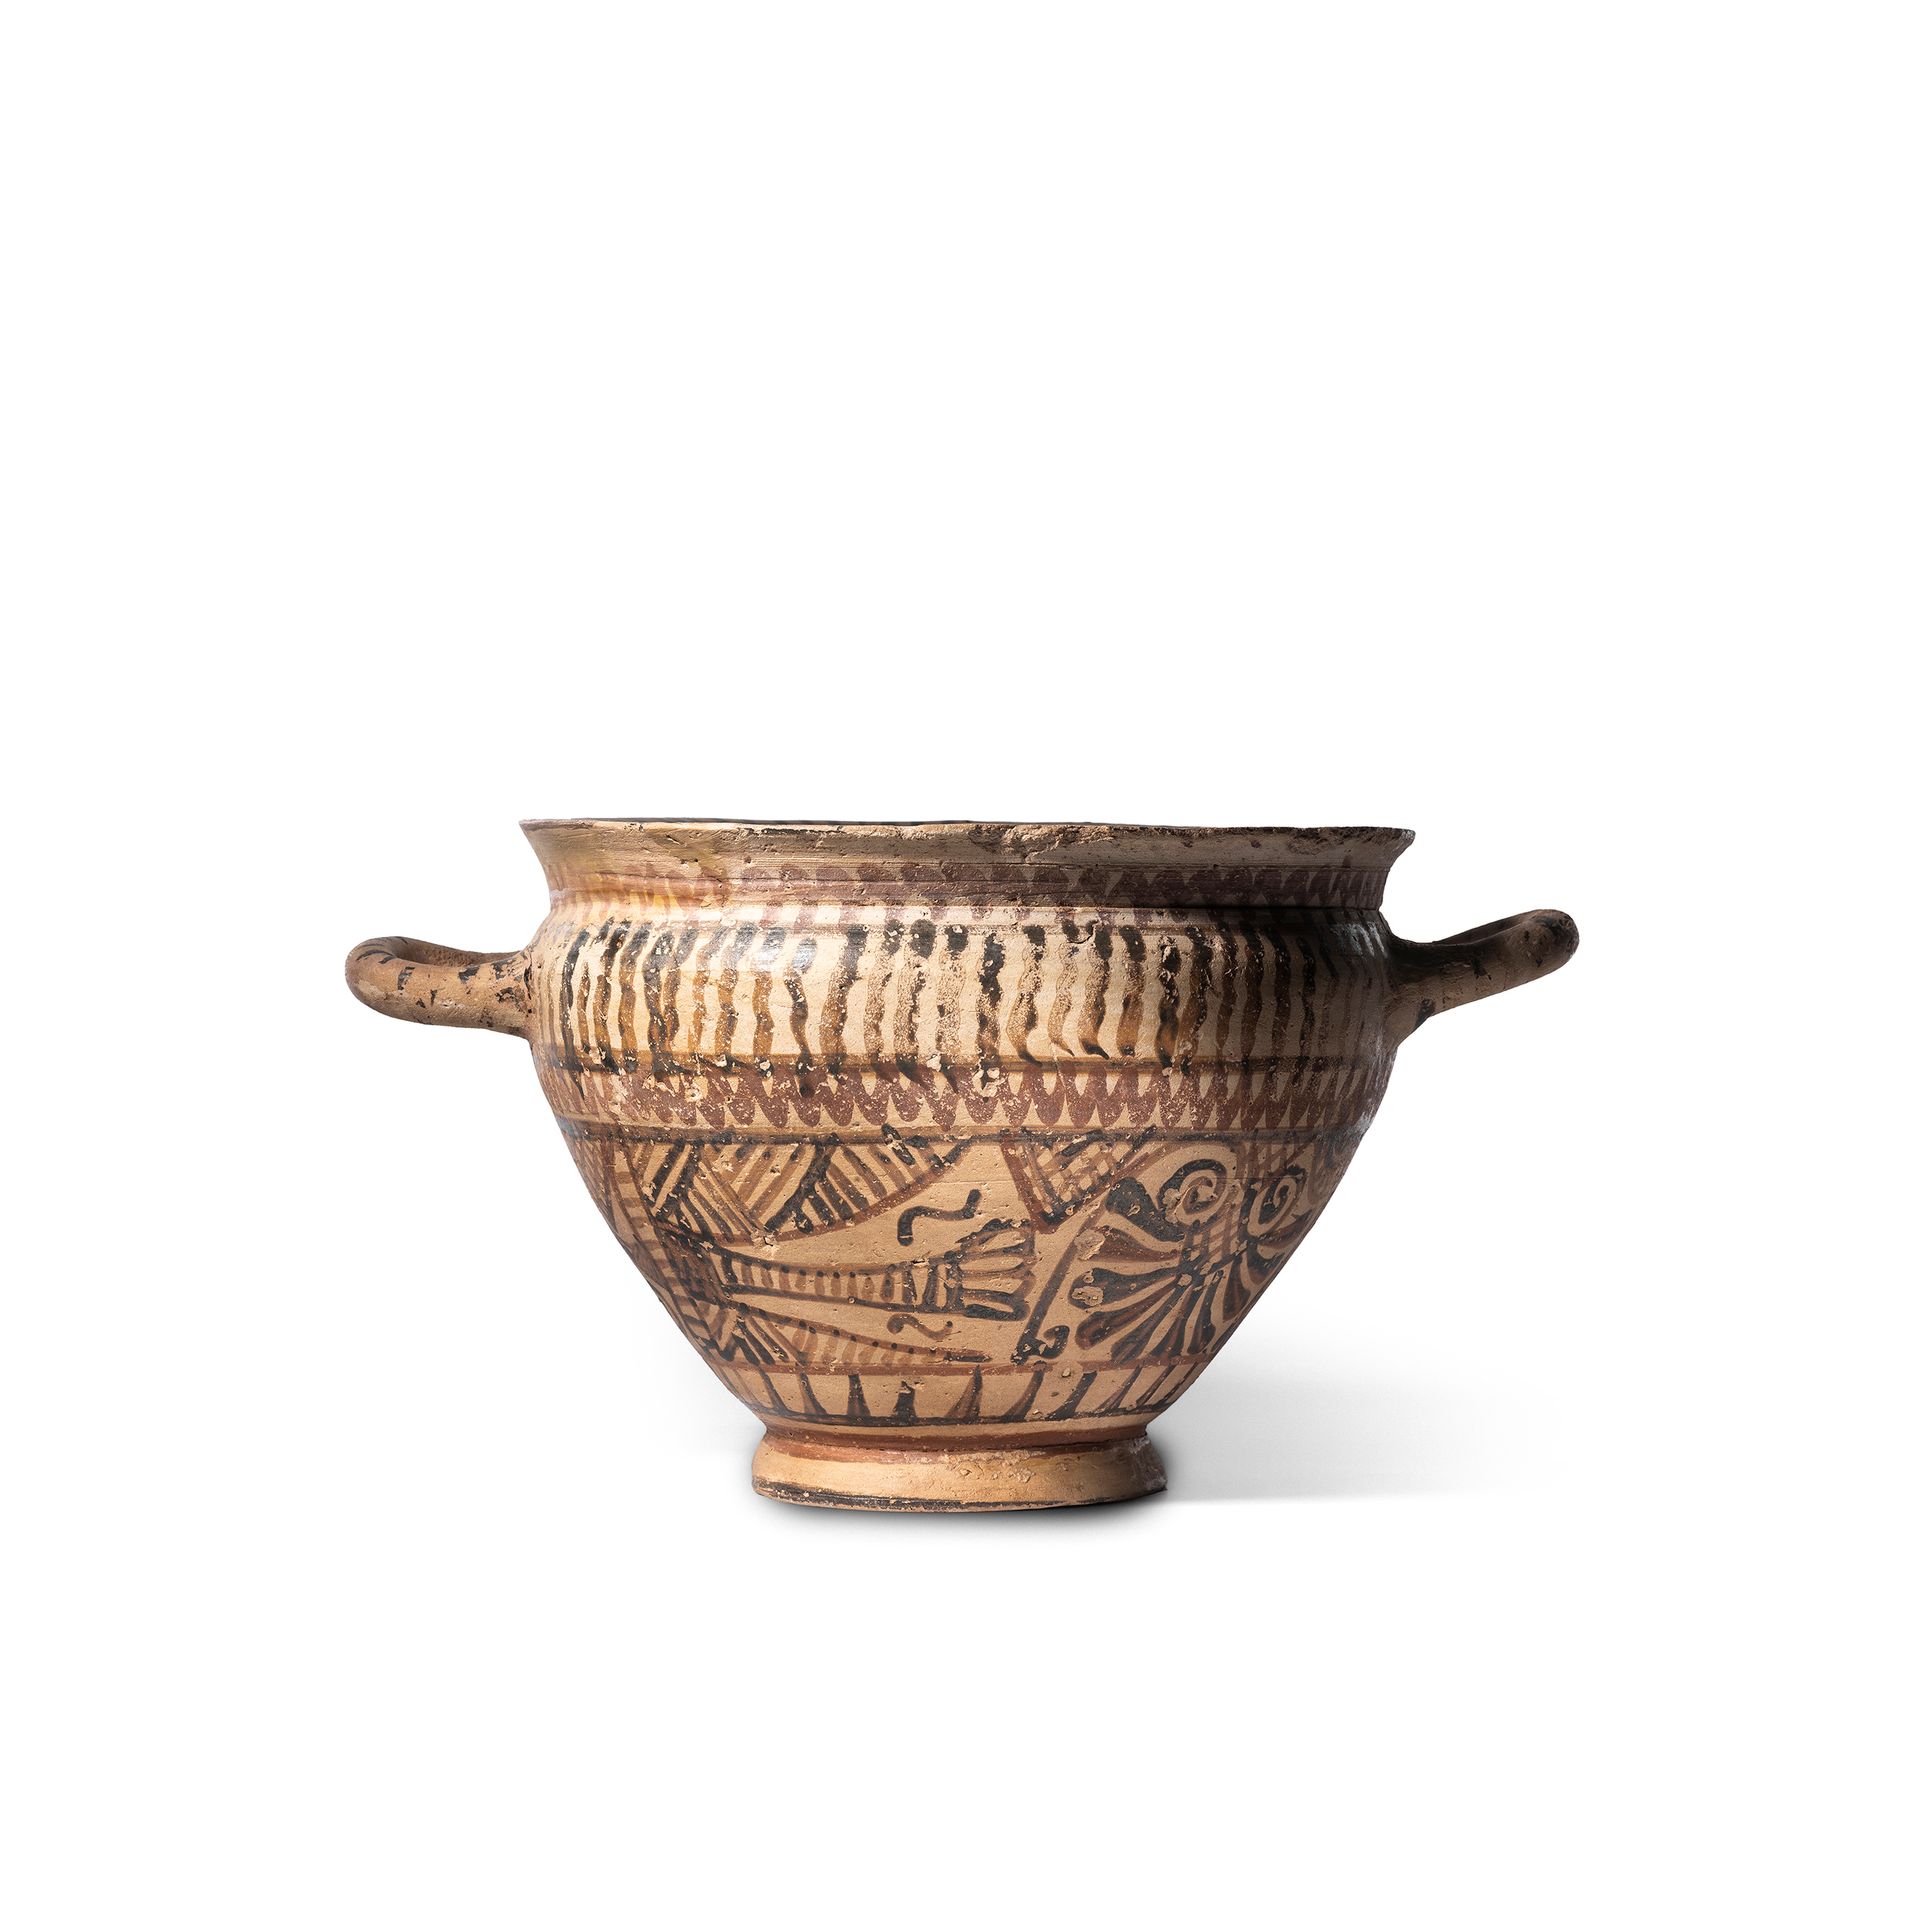 Null *SKYPHOS
Terracotta
H. 14 cm; L. 18.5 cm 
Greece, 8th-7th century B.C. 

Pr&hellip;